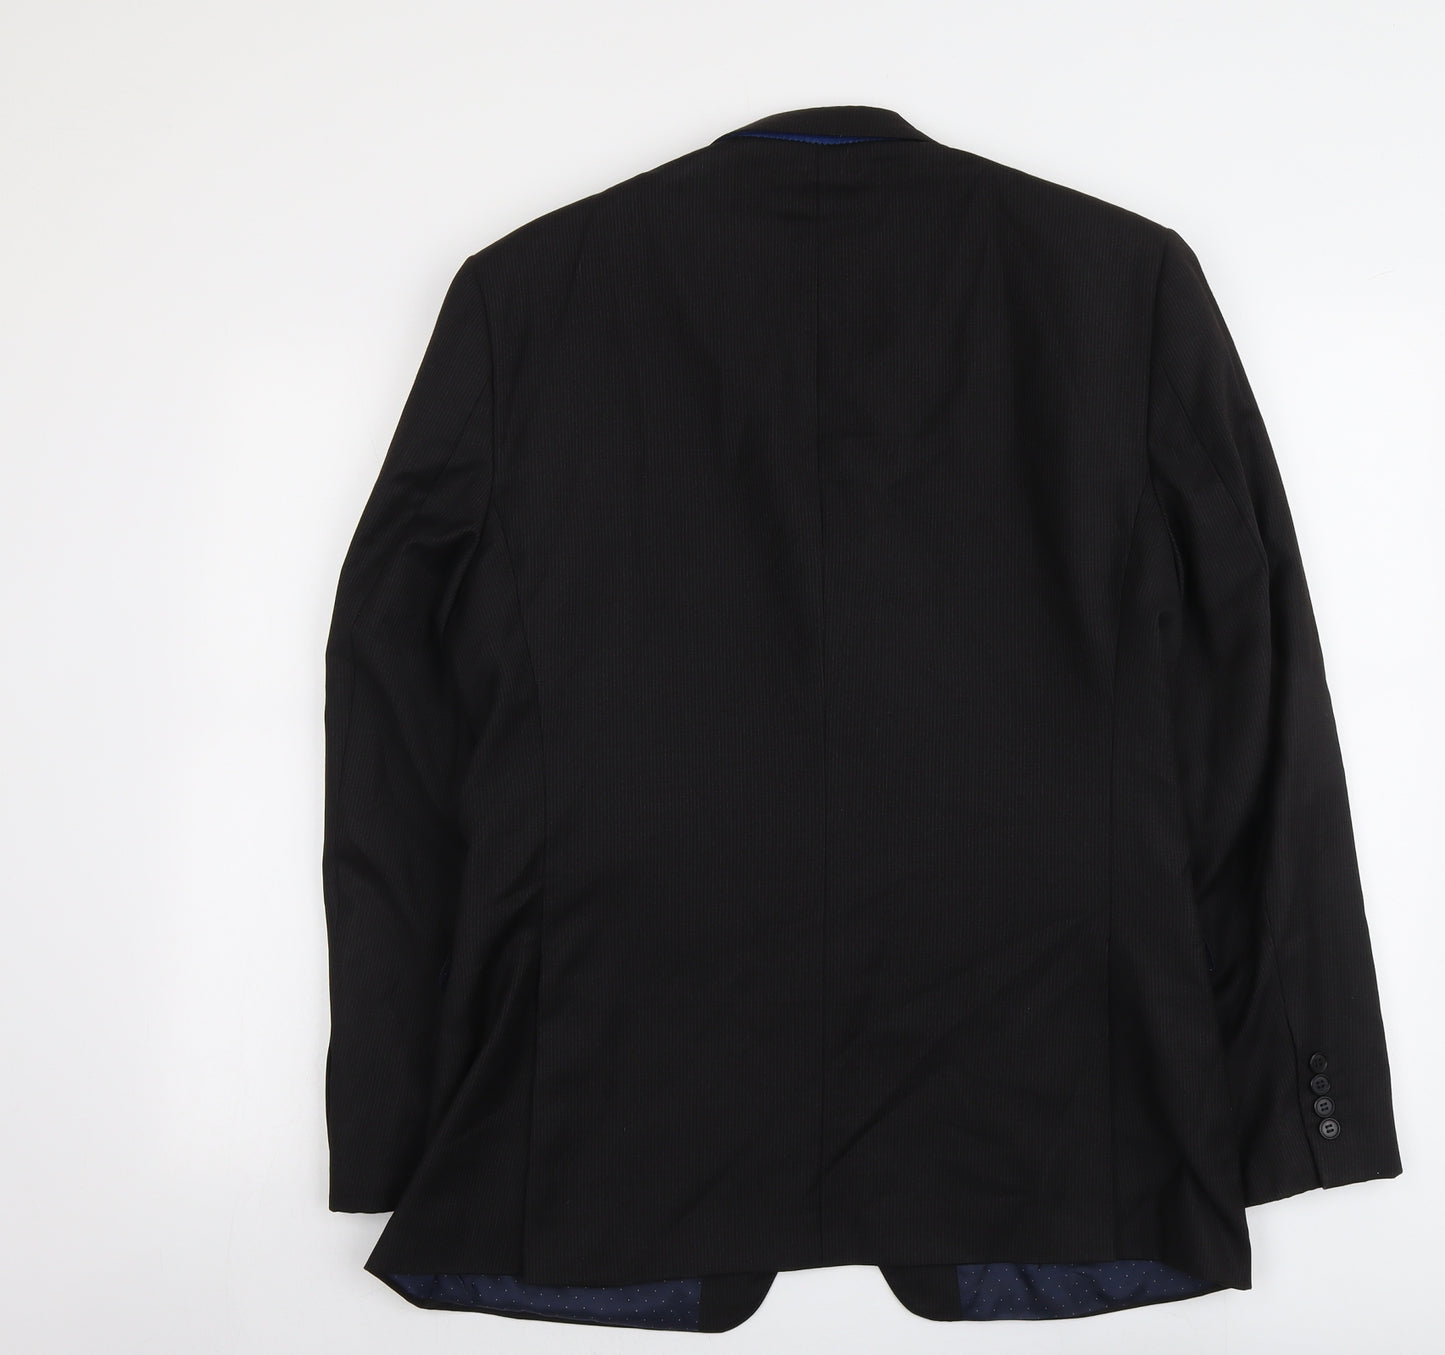 French Connection Mens Black Polyester Jacket Suit Jacket Size 42 Regular